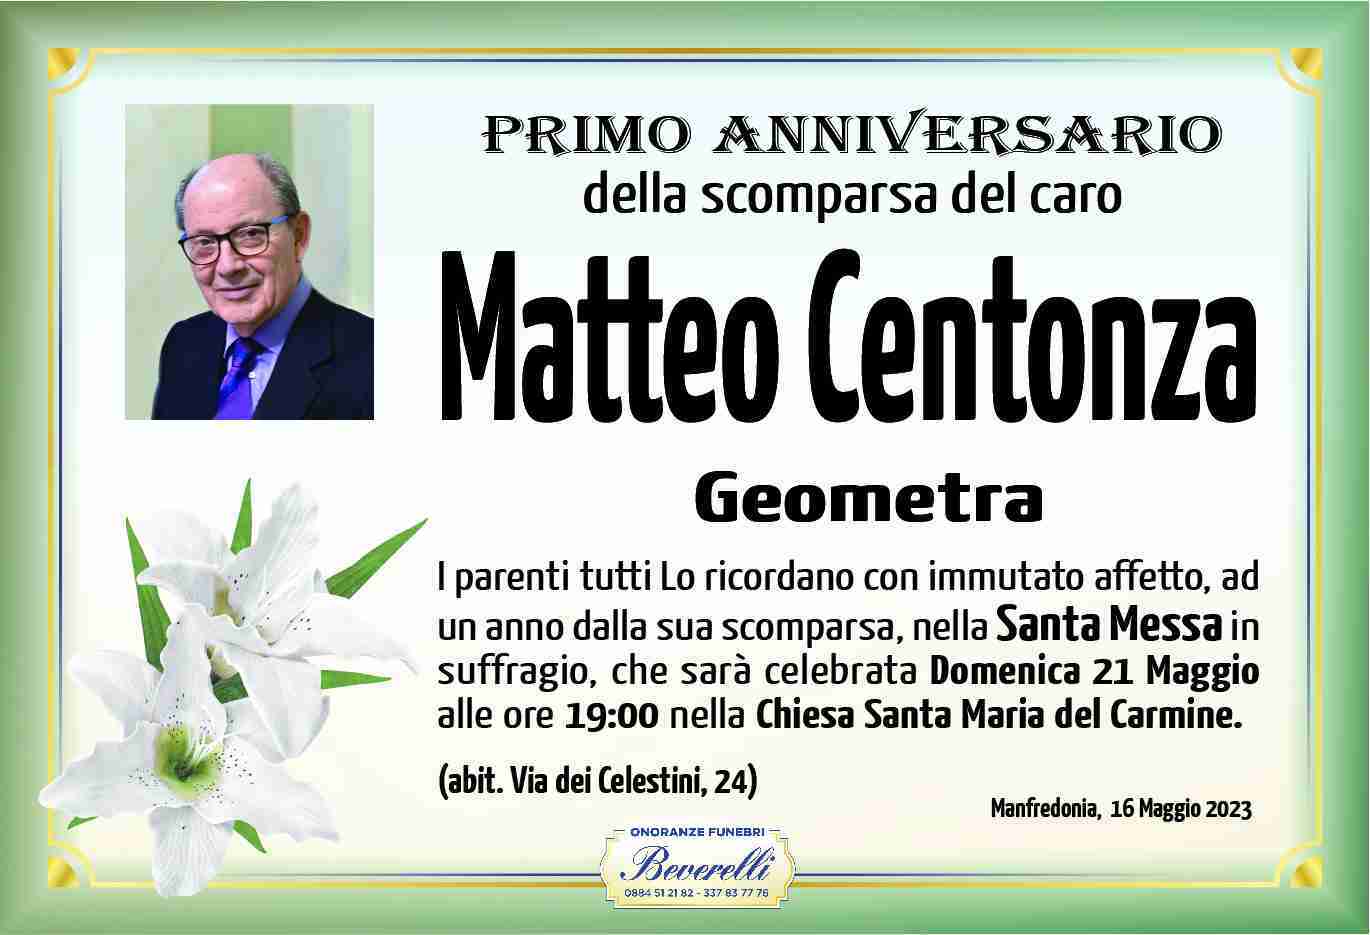 Matteo Centonza